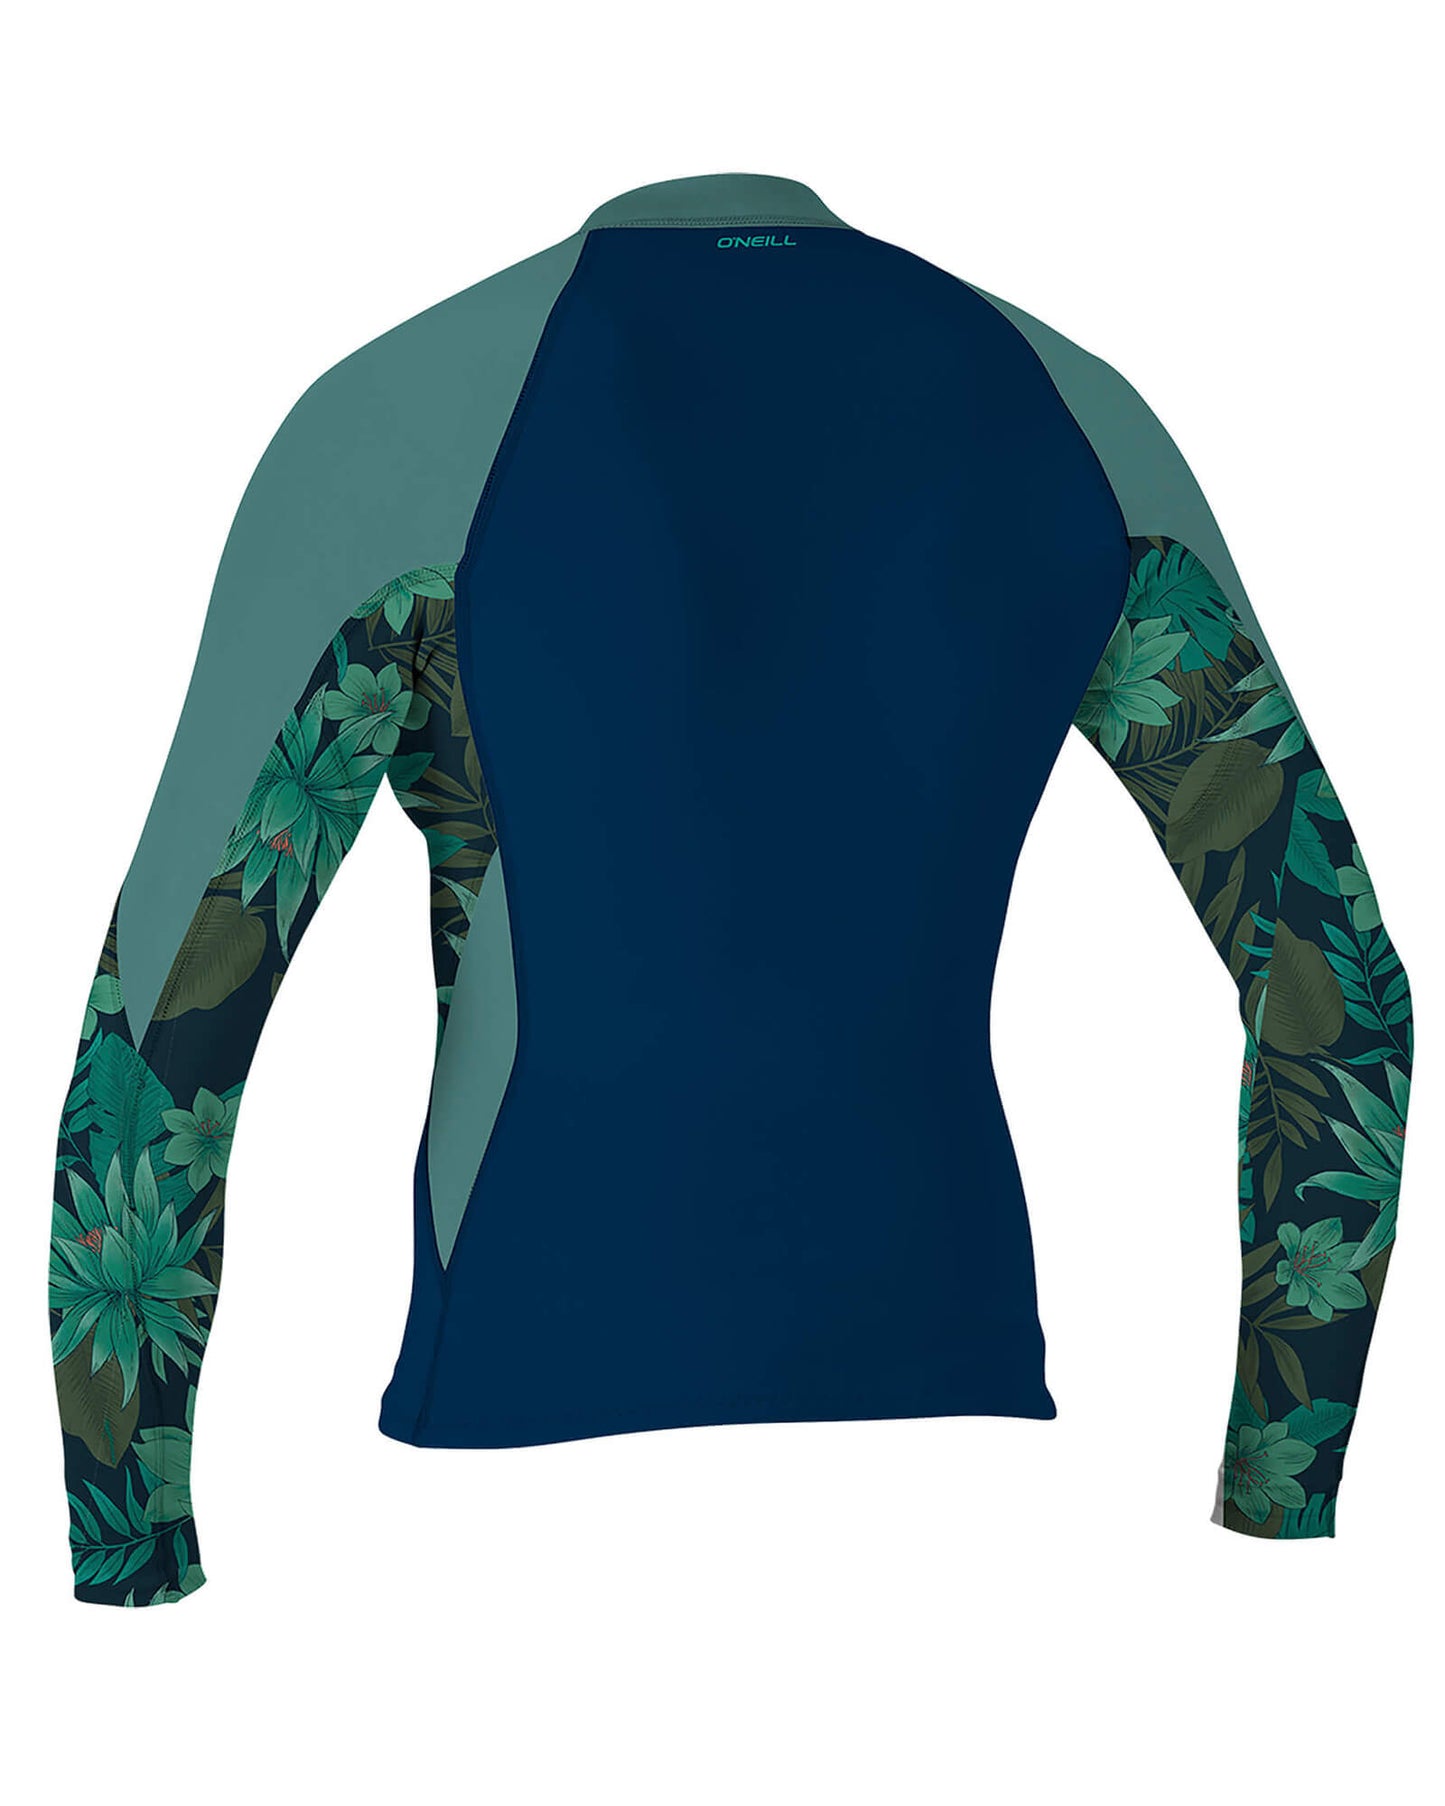 1mm Women's O'Neill BAHIA Front-Zip Wetsuit Jacket